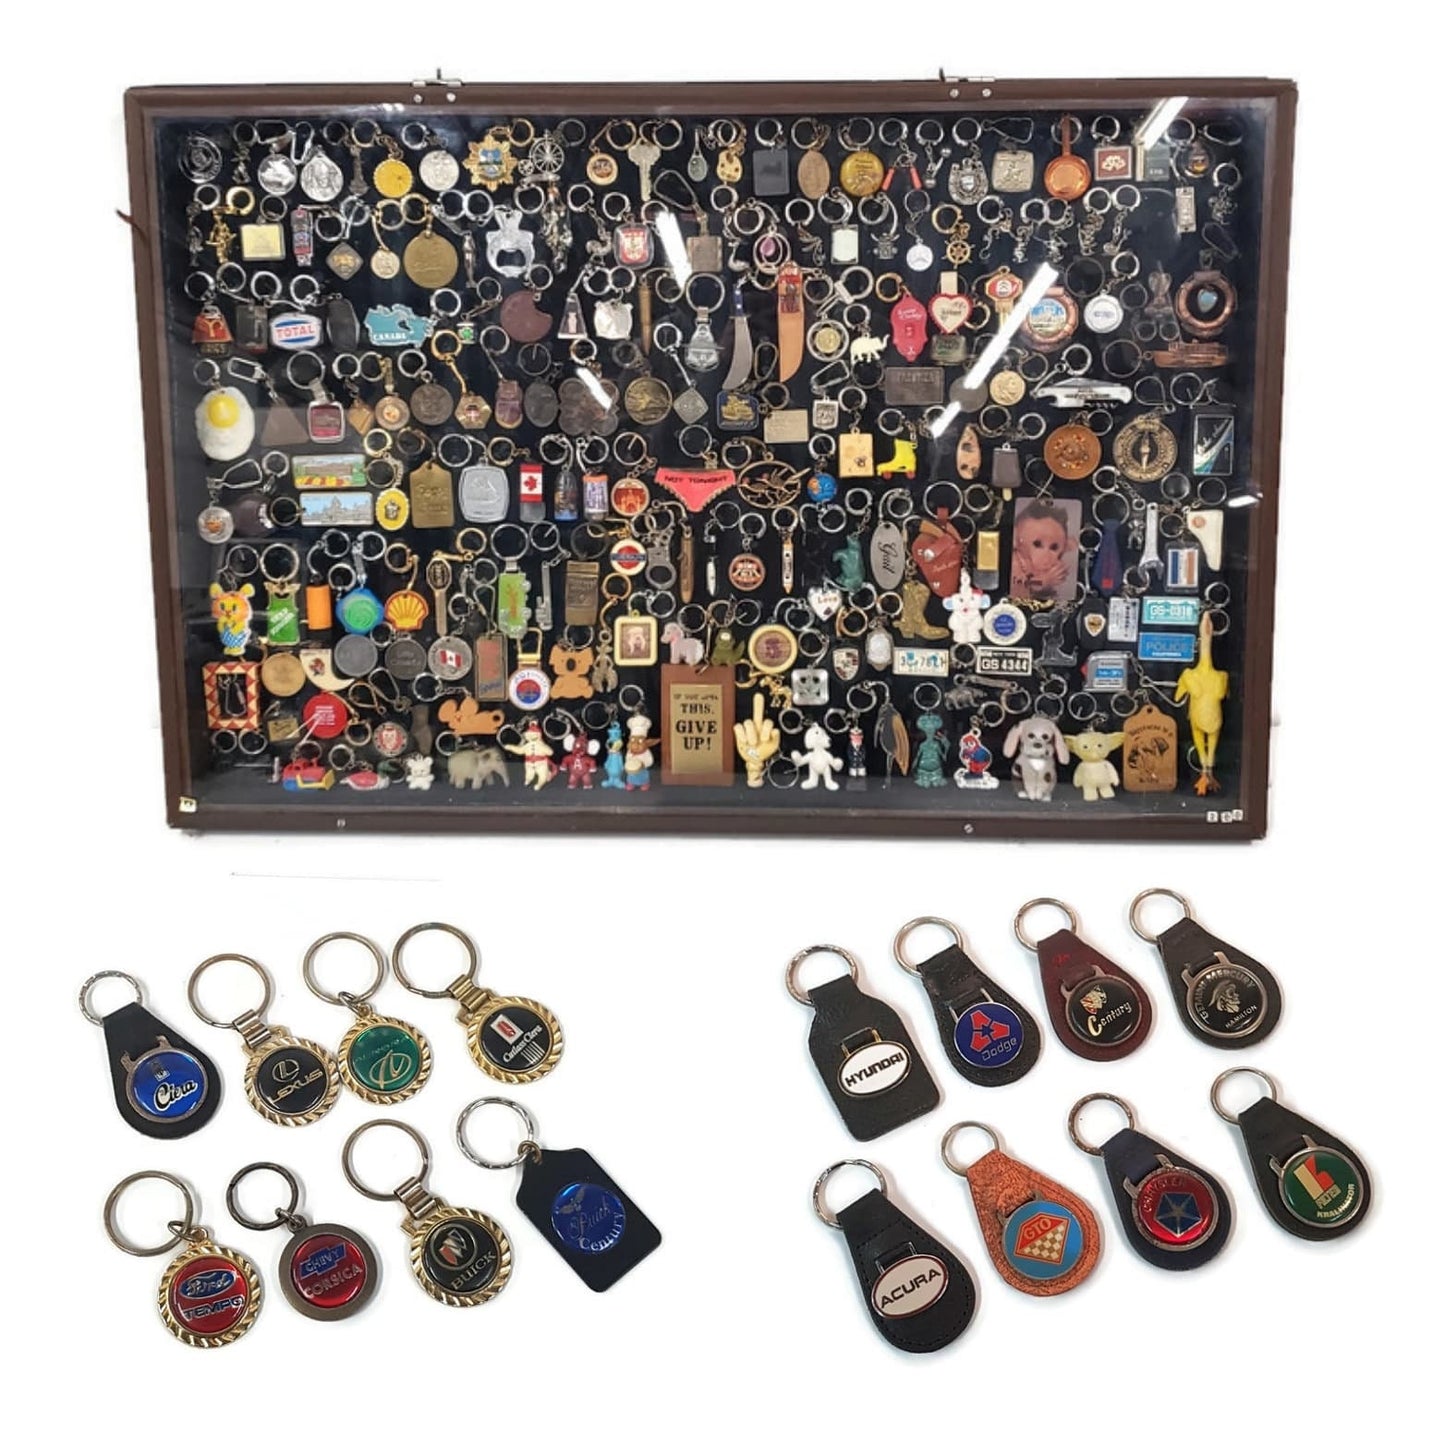 bmw key chain keychain key fob keytag vintage automotove keychain gift collectible